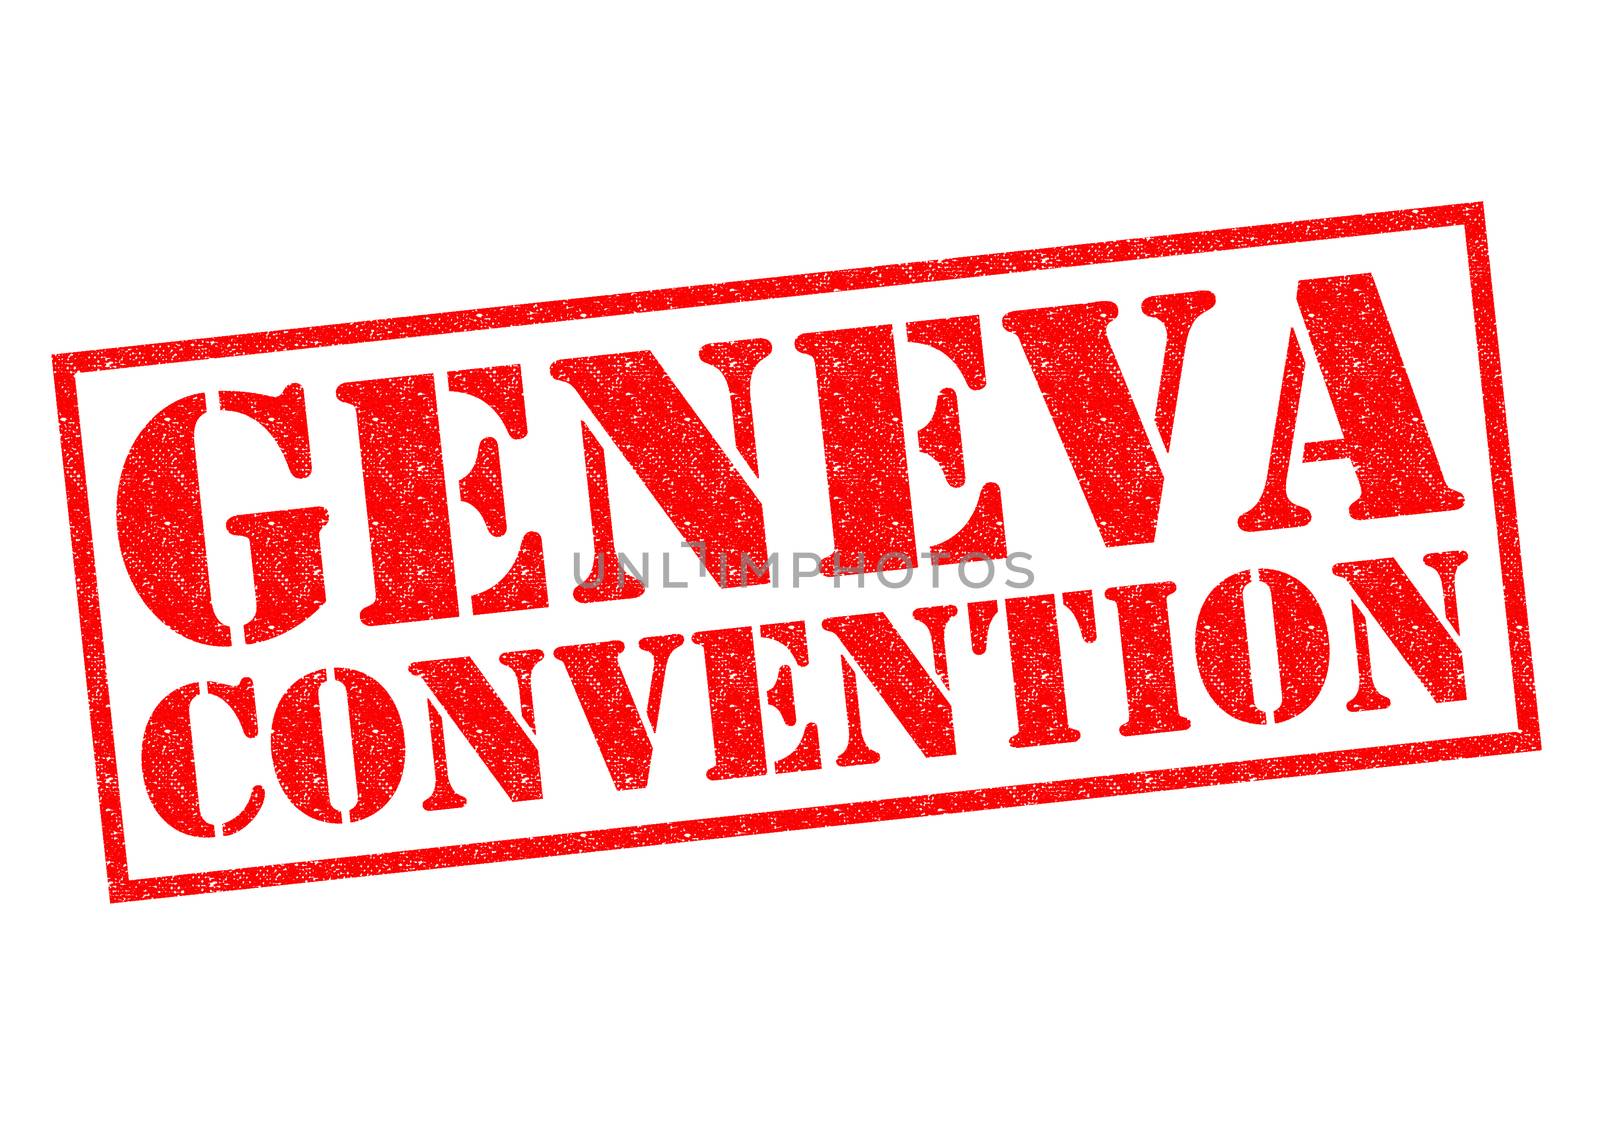 GENEVA CONVENTION by chrisdorney